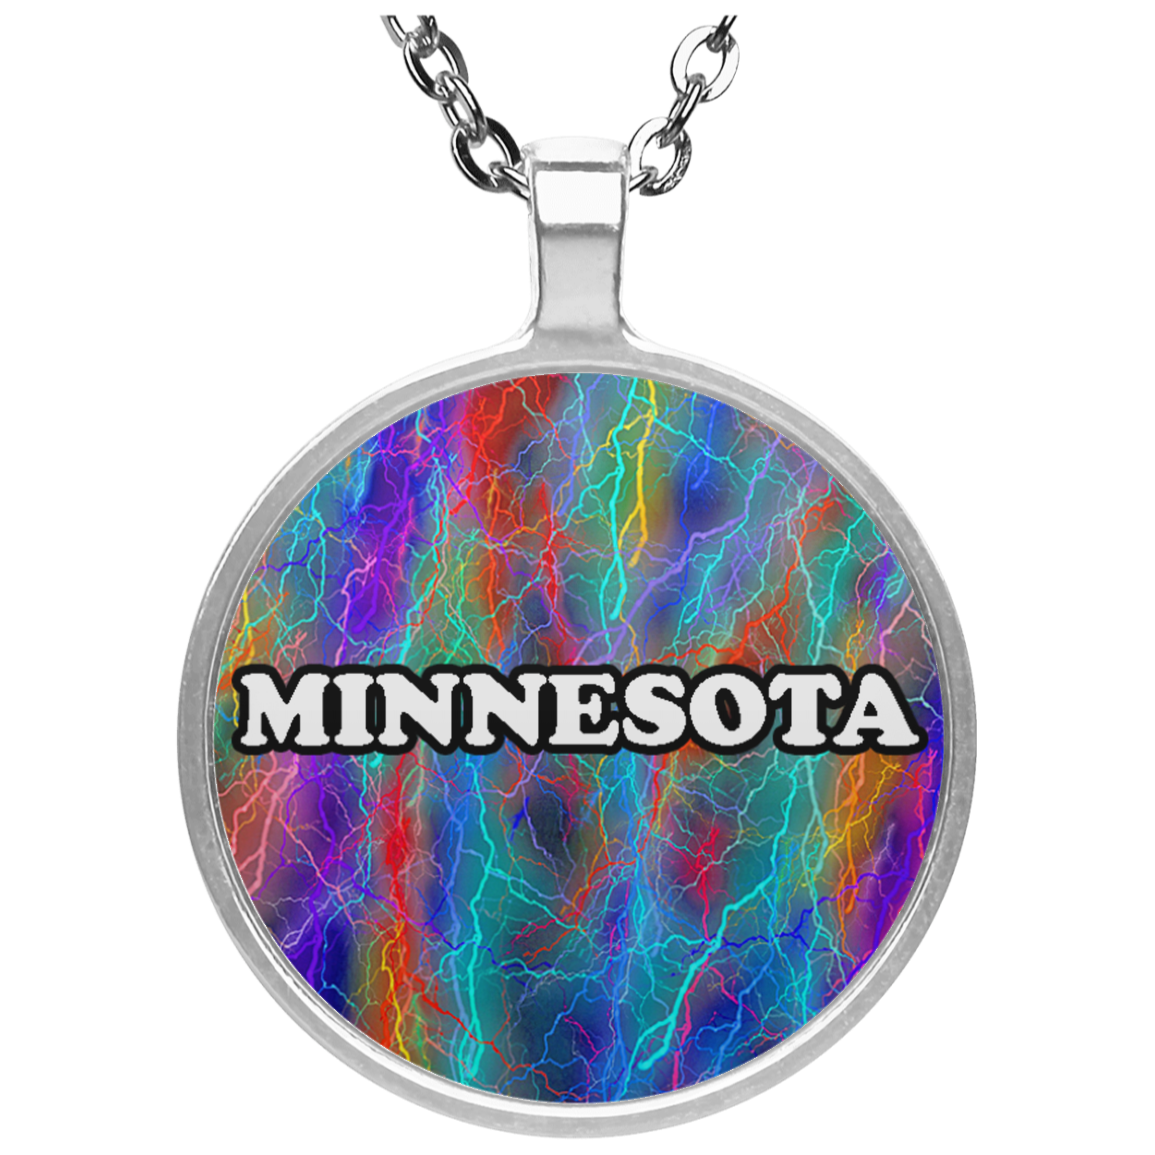 Minnesota Necklace